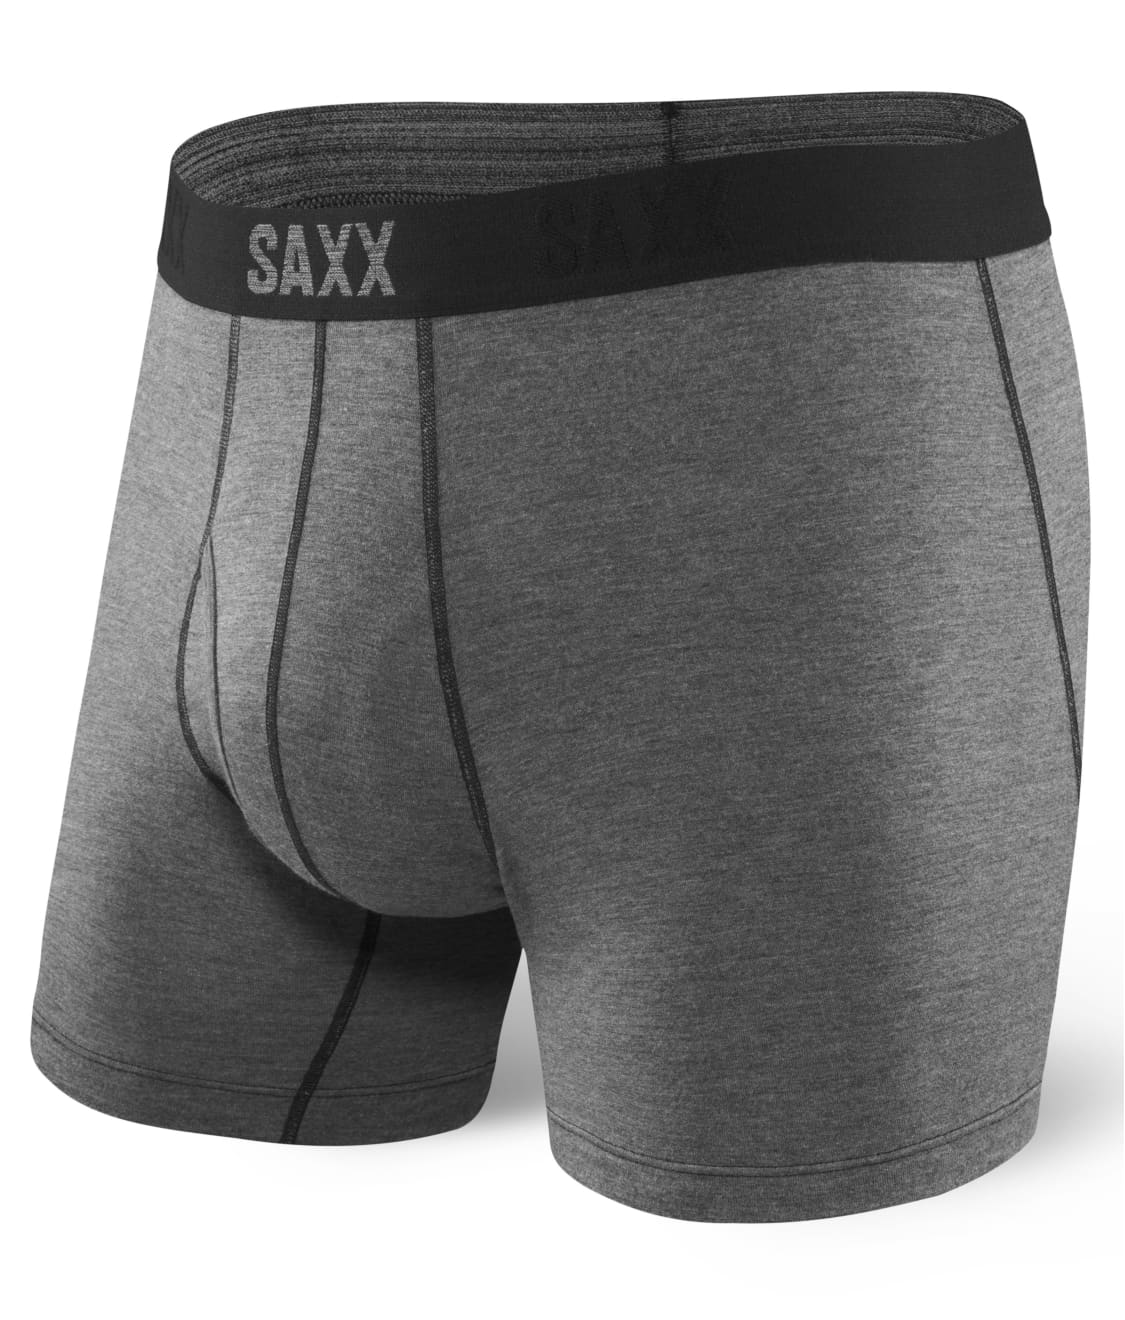 SAXX Platinum Boxer Brief & Reviews | Bare Necessities (Style SXBB41F)